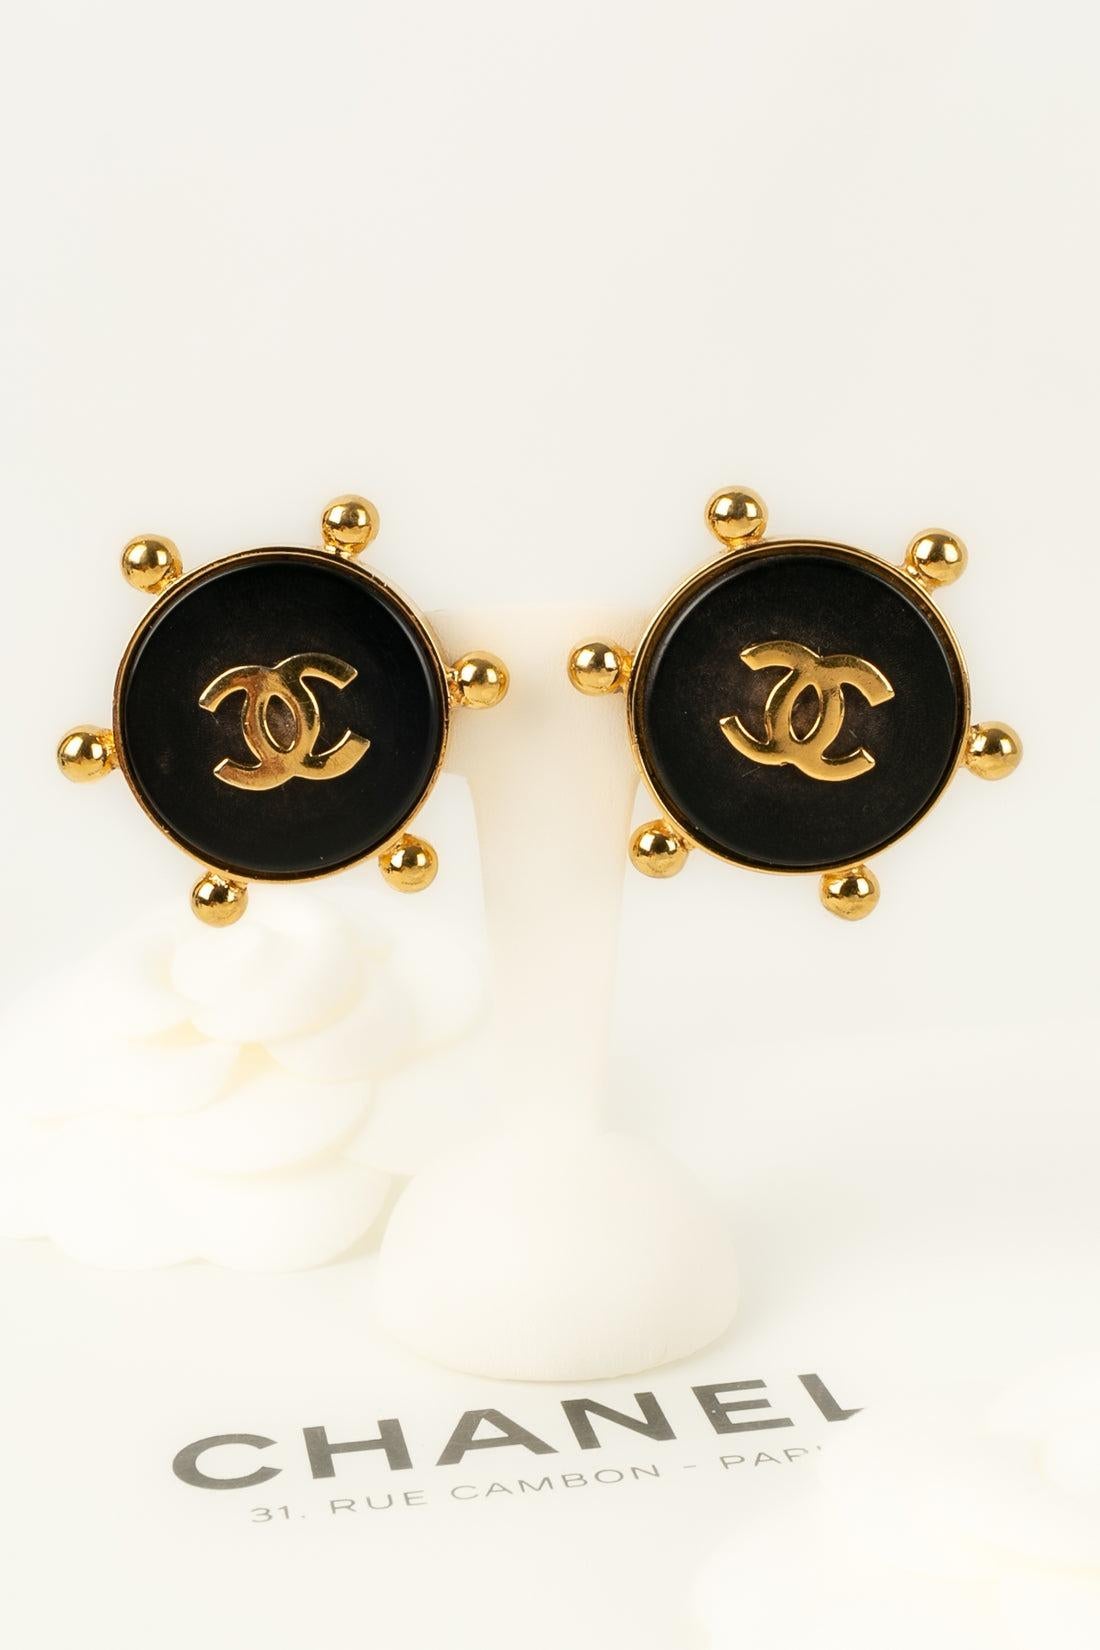 Chanel Earrings in Golden Metal and Black Bakelite For Sale 3